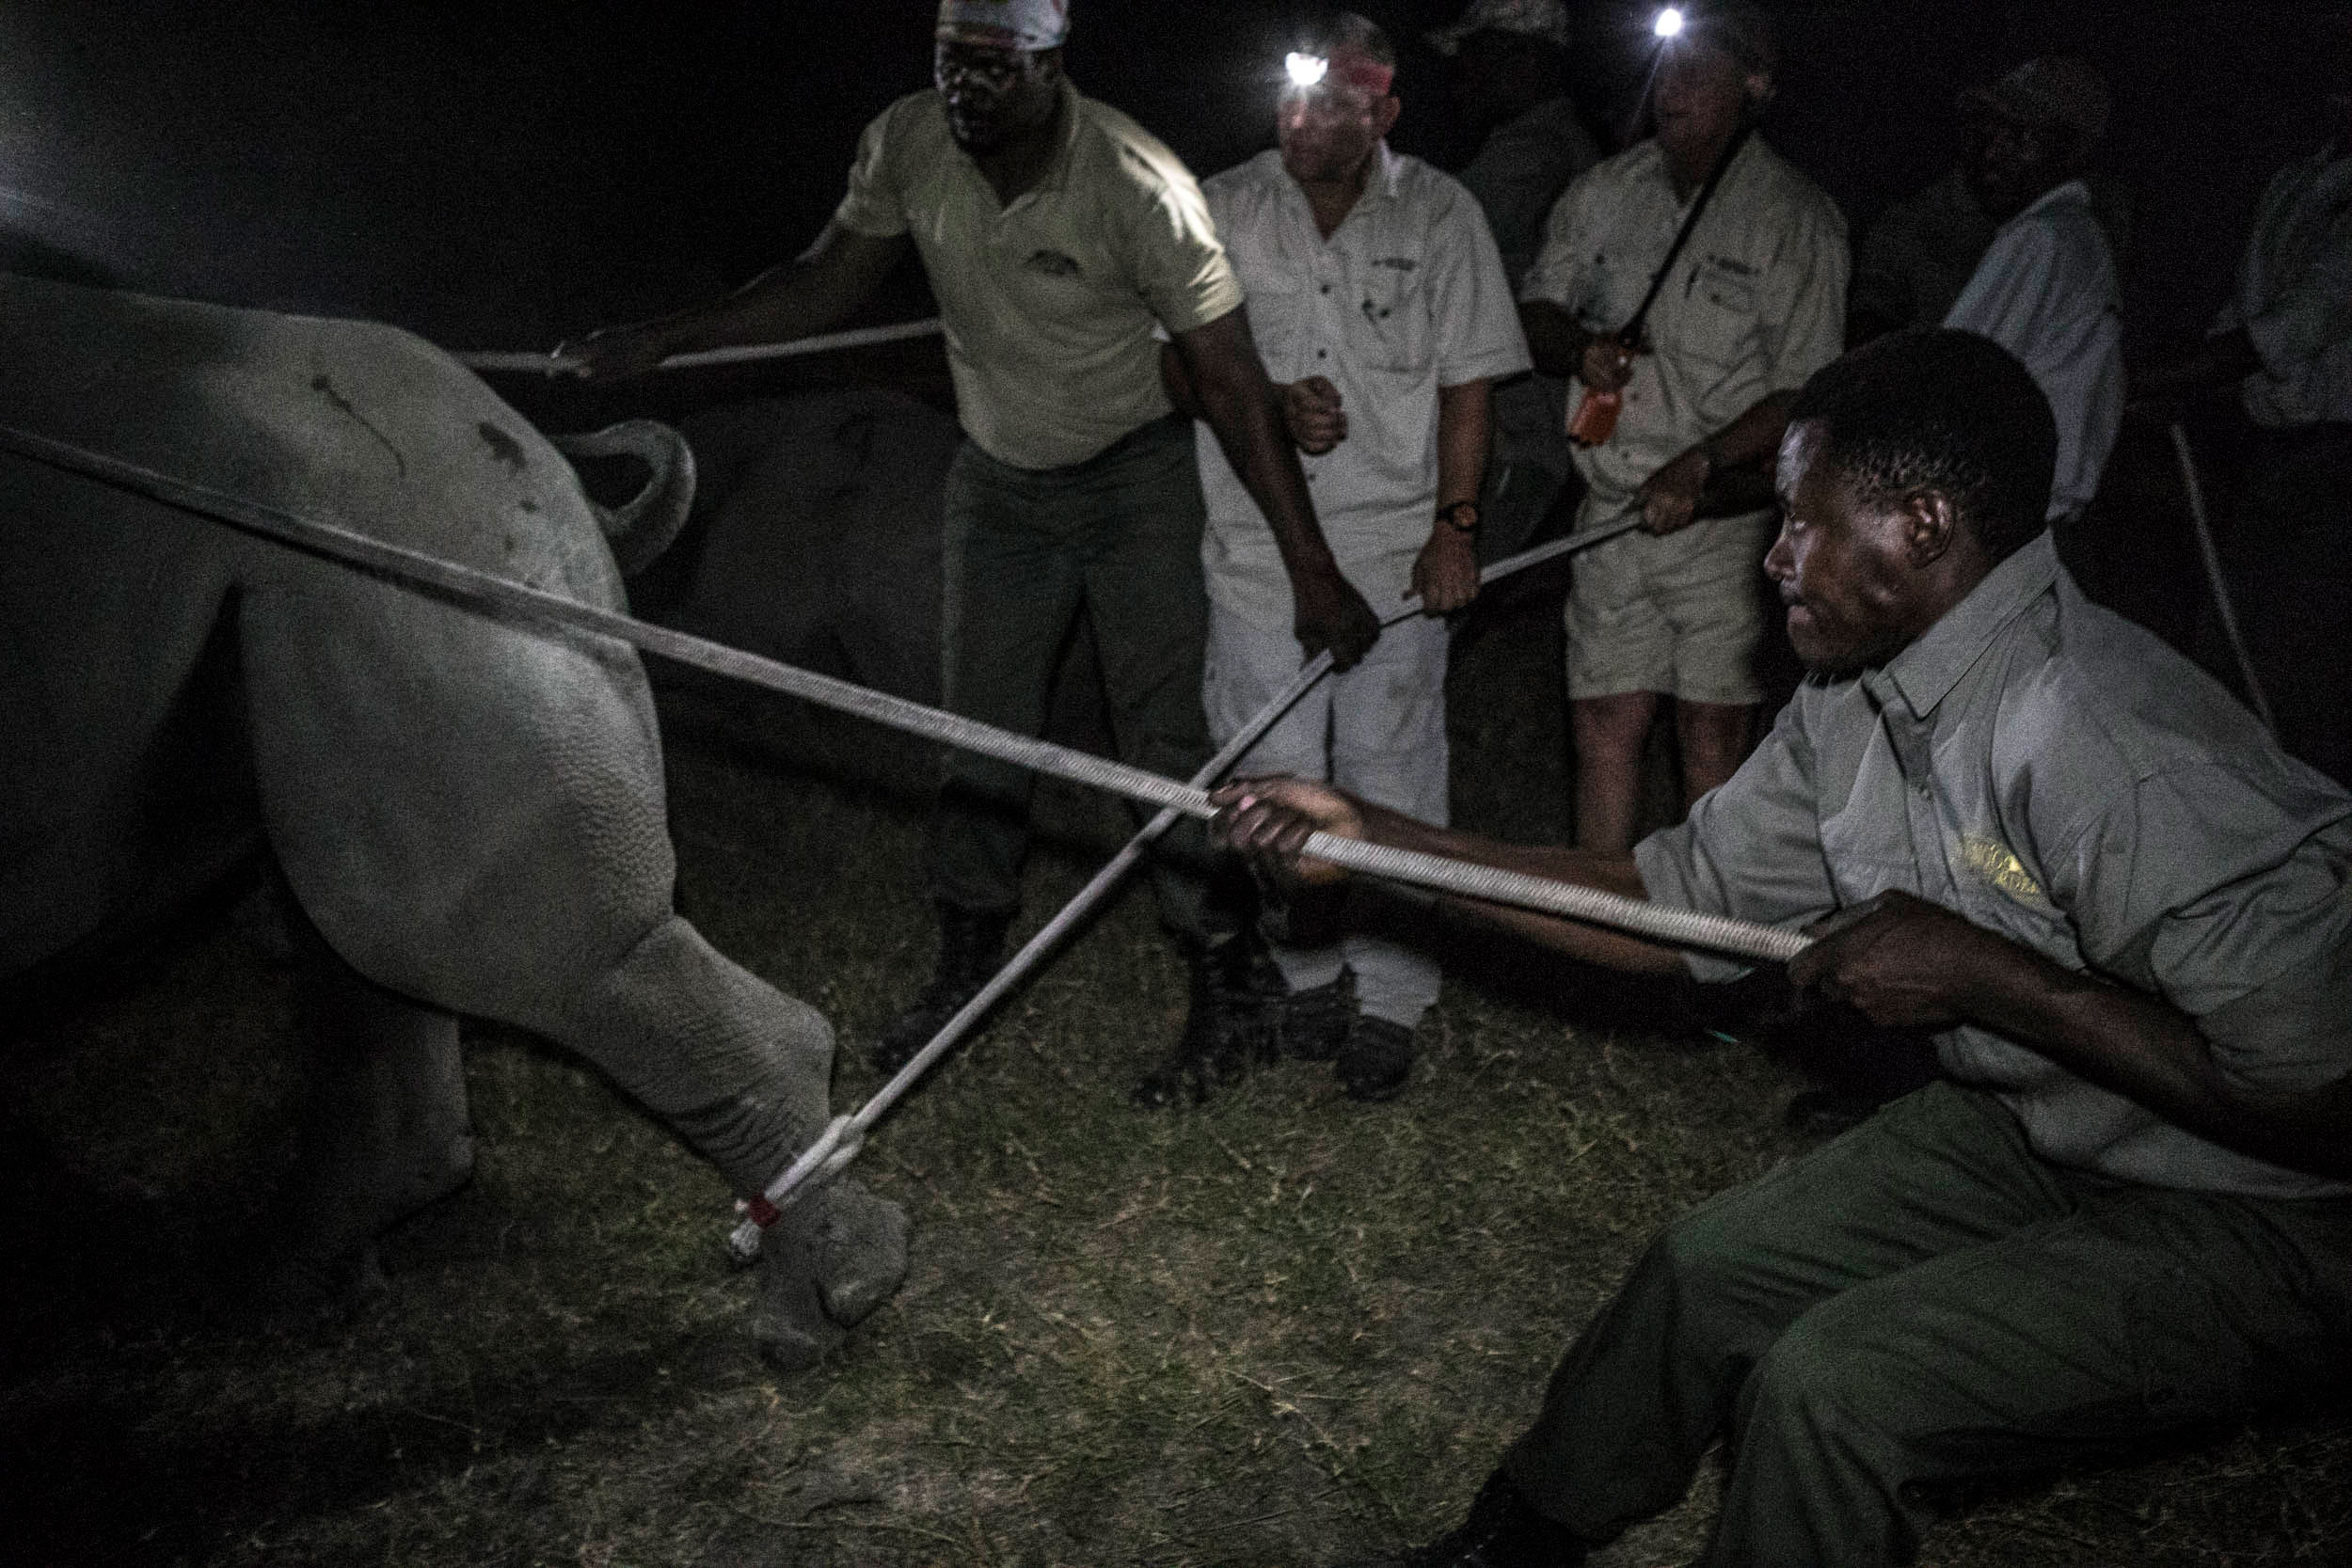 Rhino conservation 